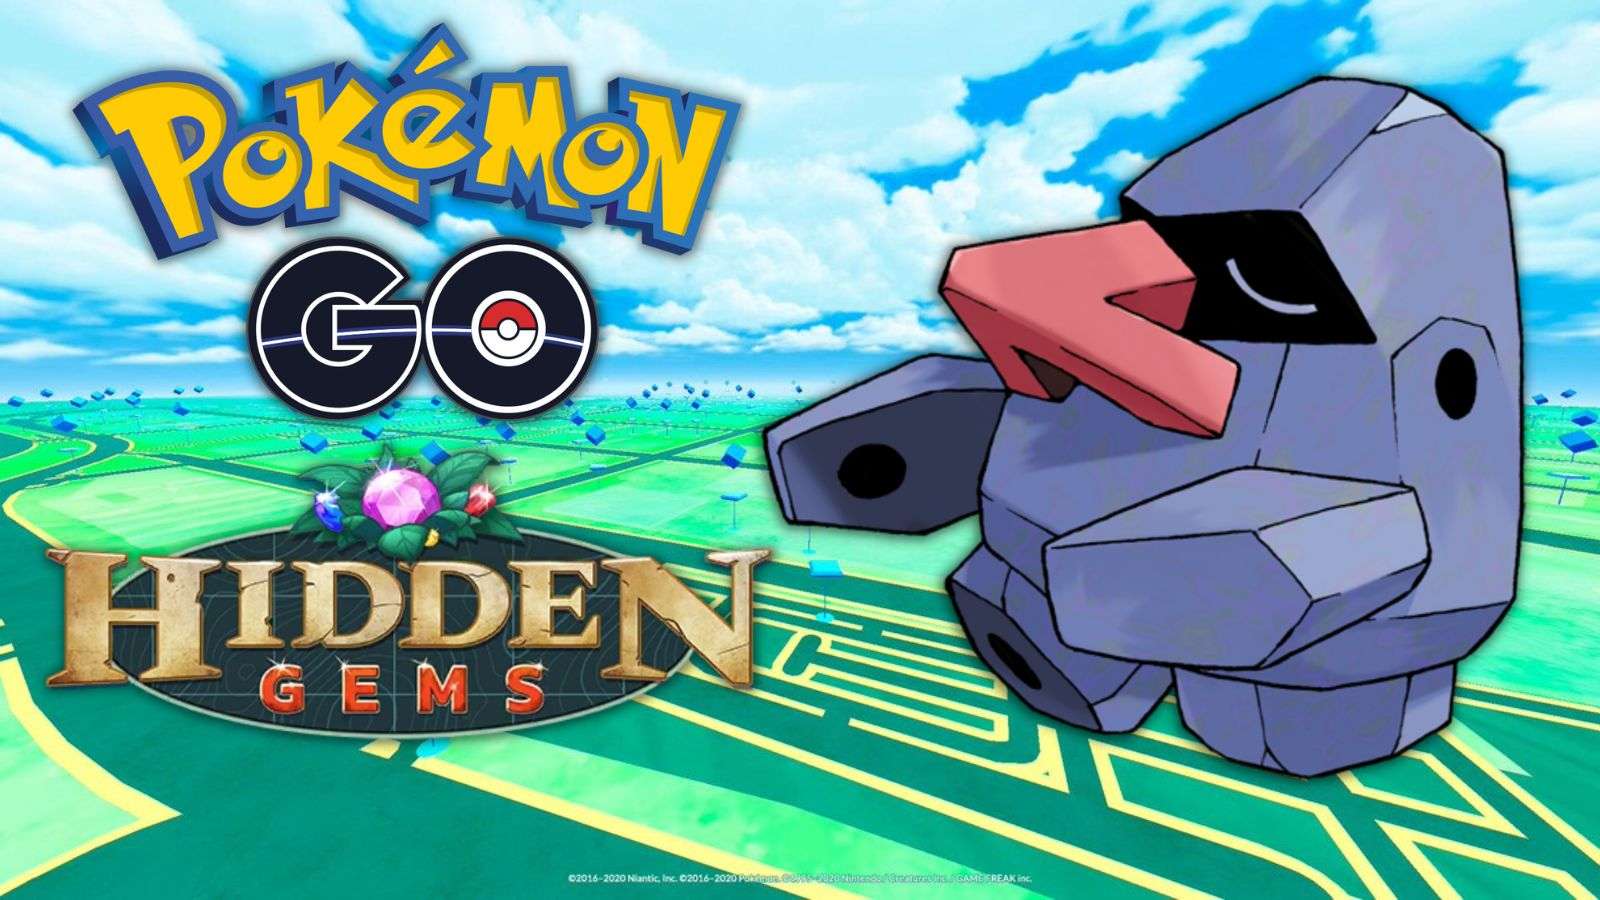 pokemon go hidden gems nosepass header